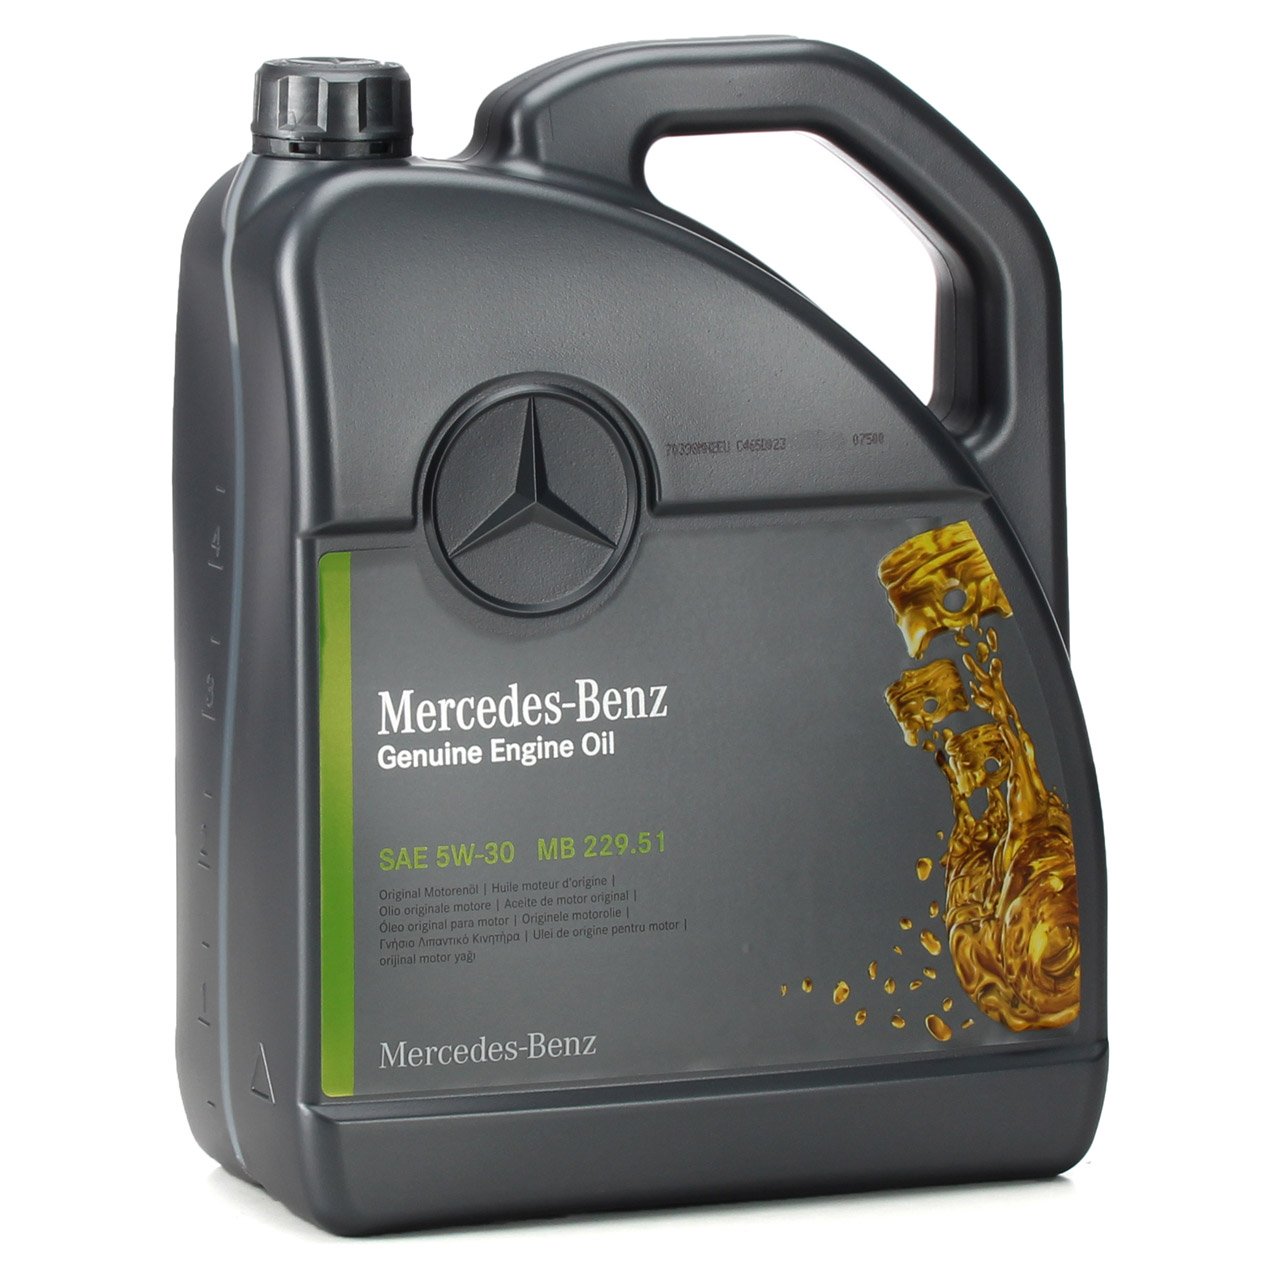 5L 5 Liter ORIGINAL Mercedes-Benz Motoröl Öl 5W-30 MB 229.51 000989690613